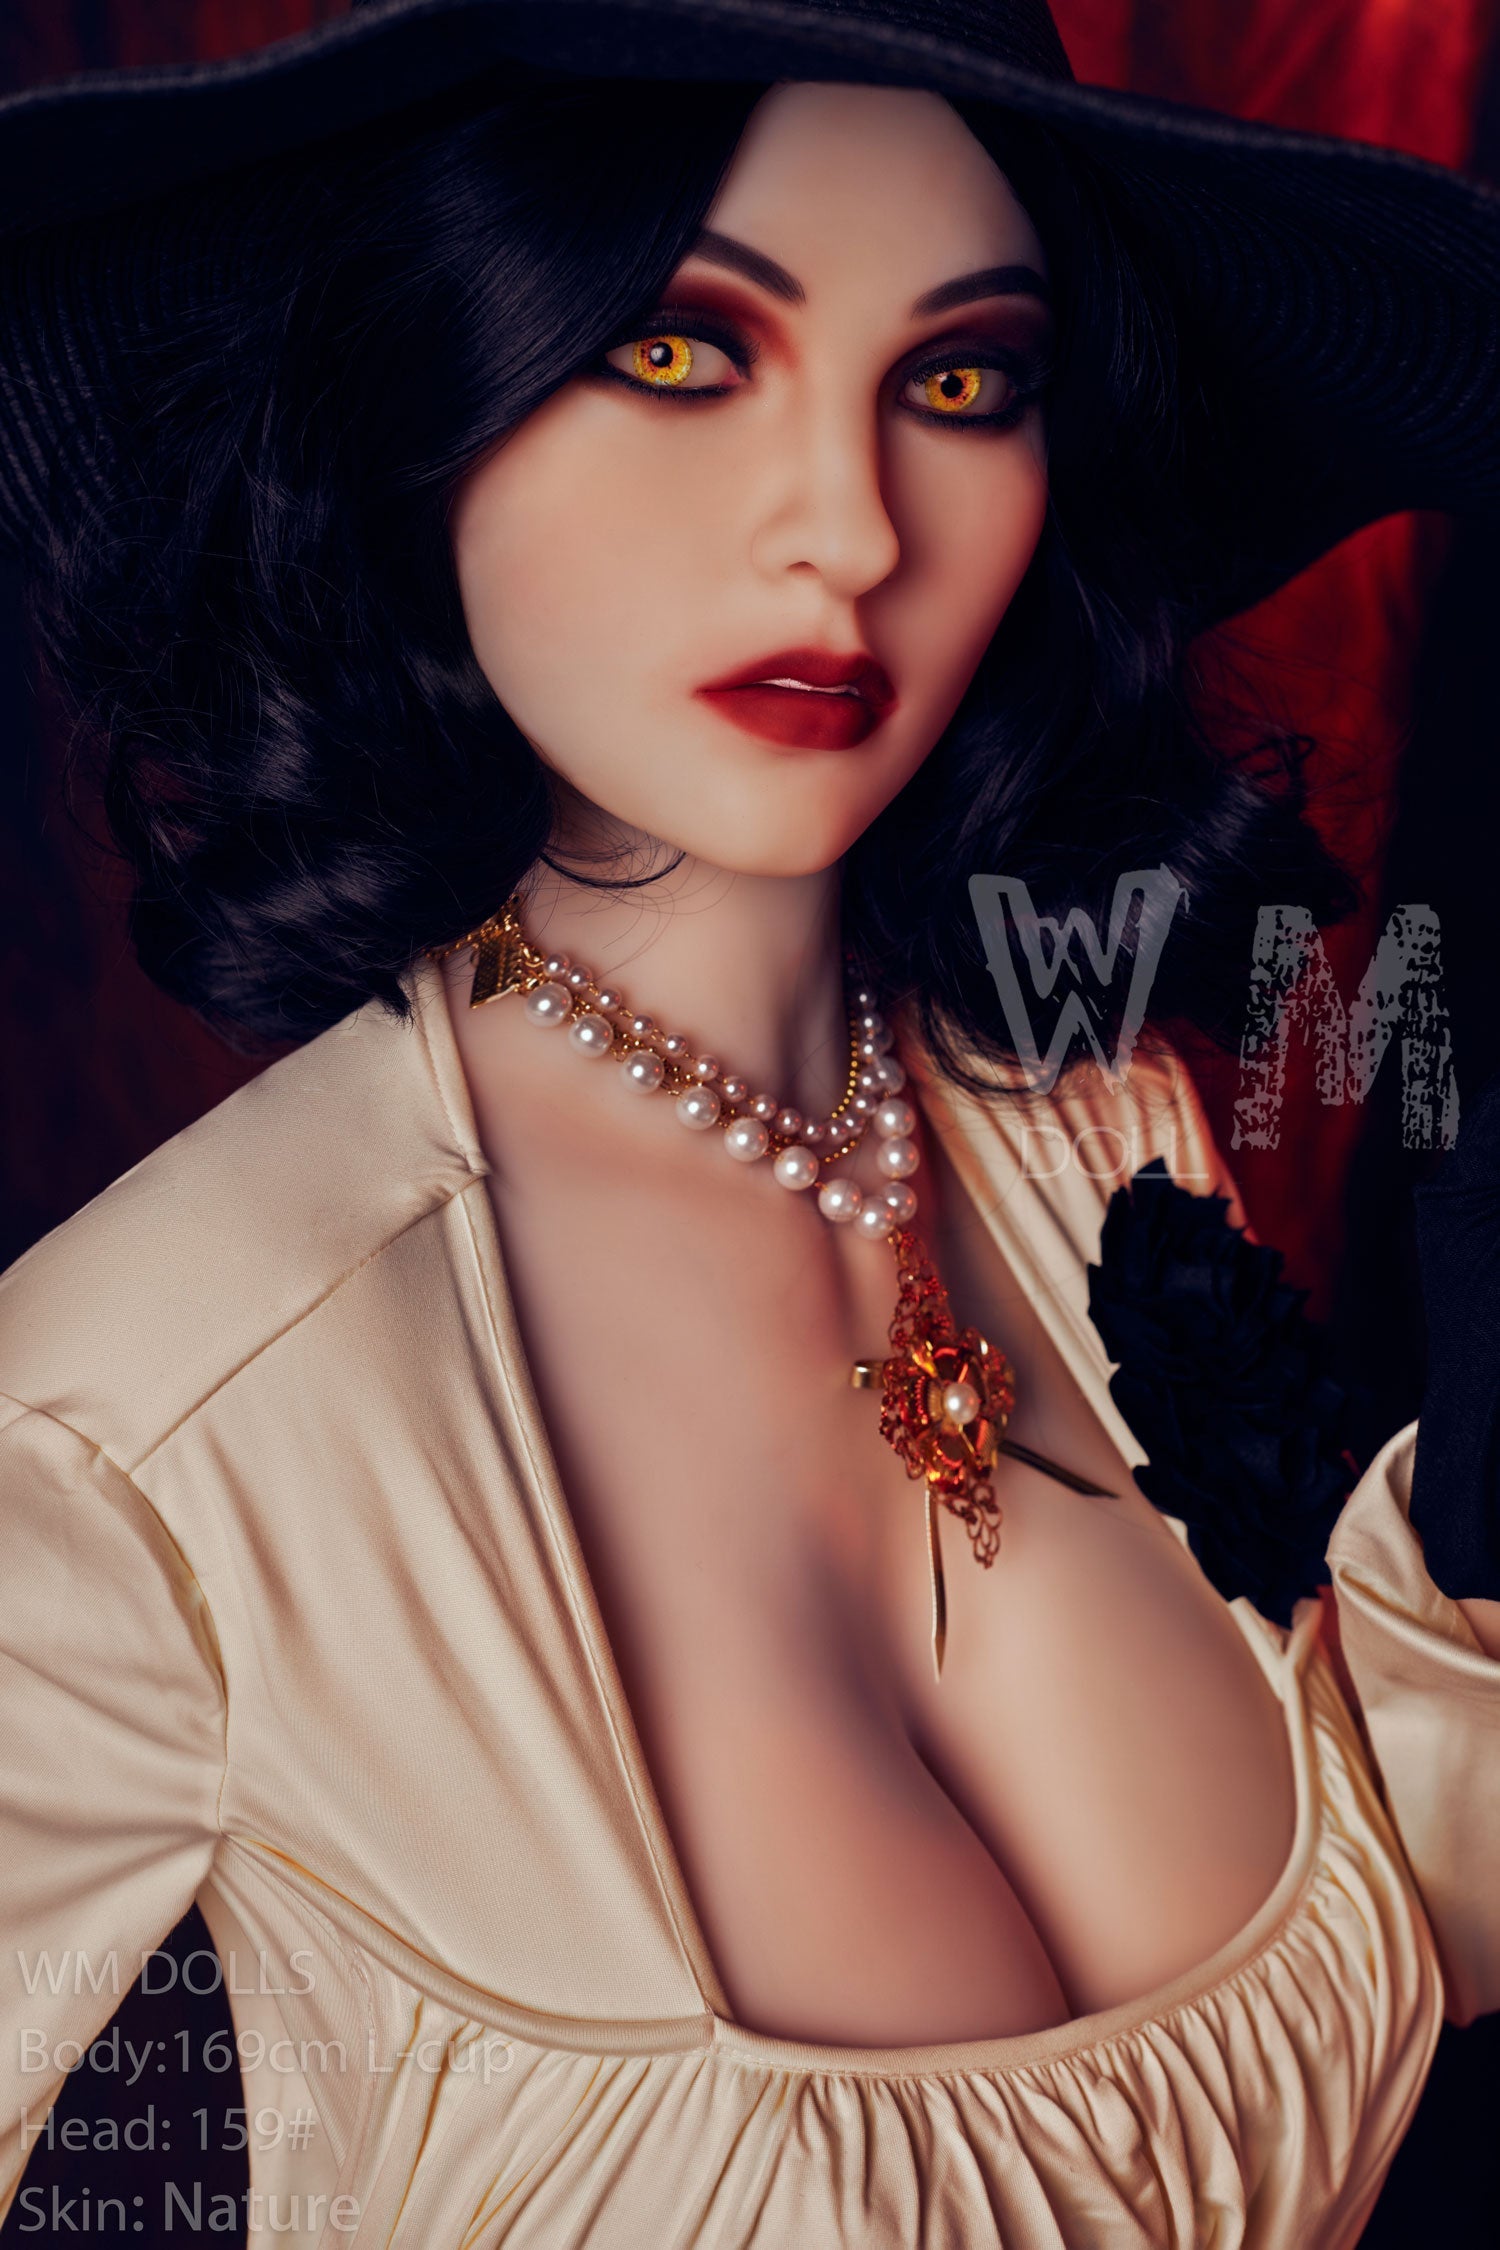 WM DOLL 169 CM L Fusion - Josephine | Buy Sex Dolls at DOLLS ACTUALLY